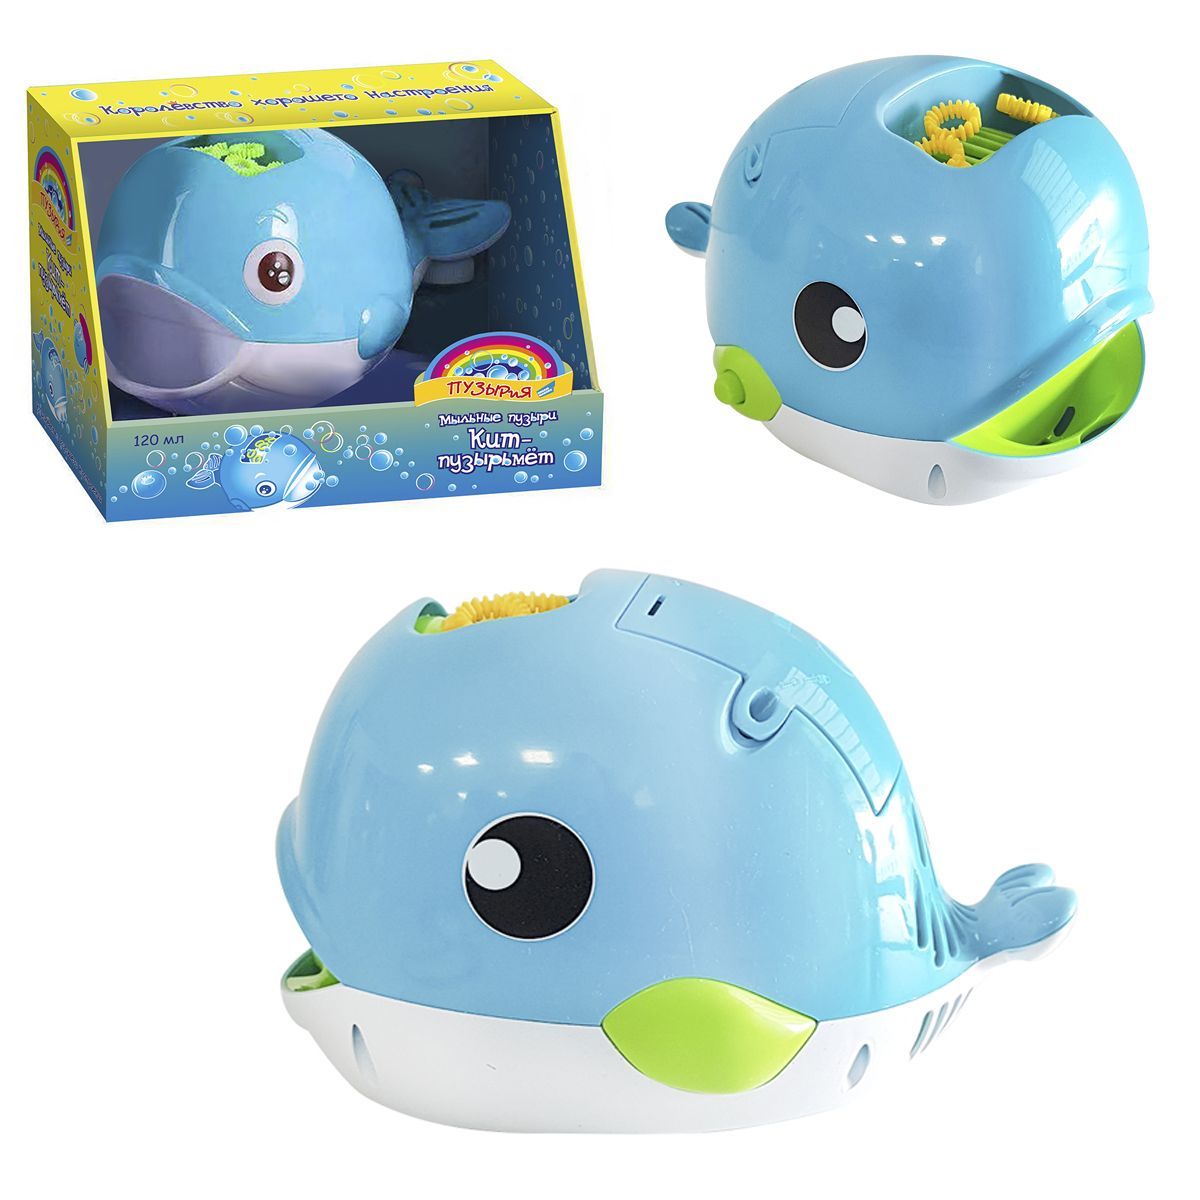 Уценка.  Игрушка "Кит- пузырятор" - кит не прикреплен к упаковке, маленькая царапина на ките